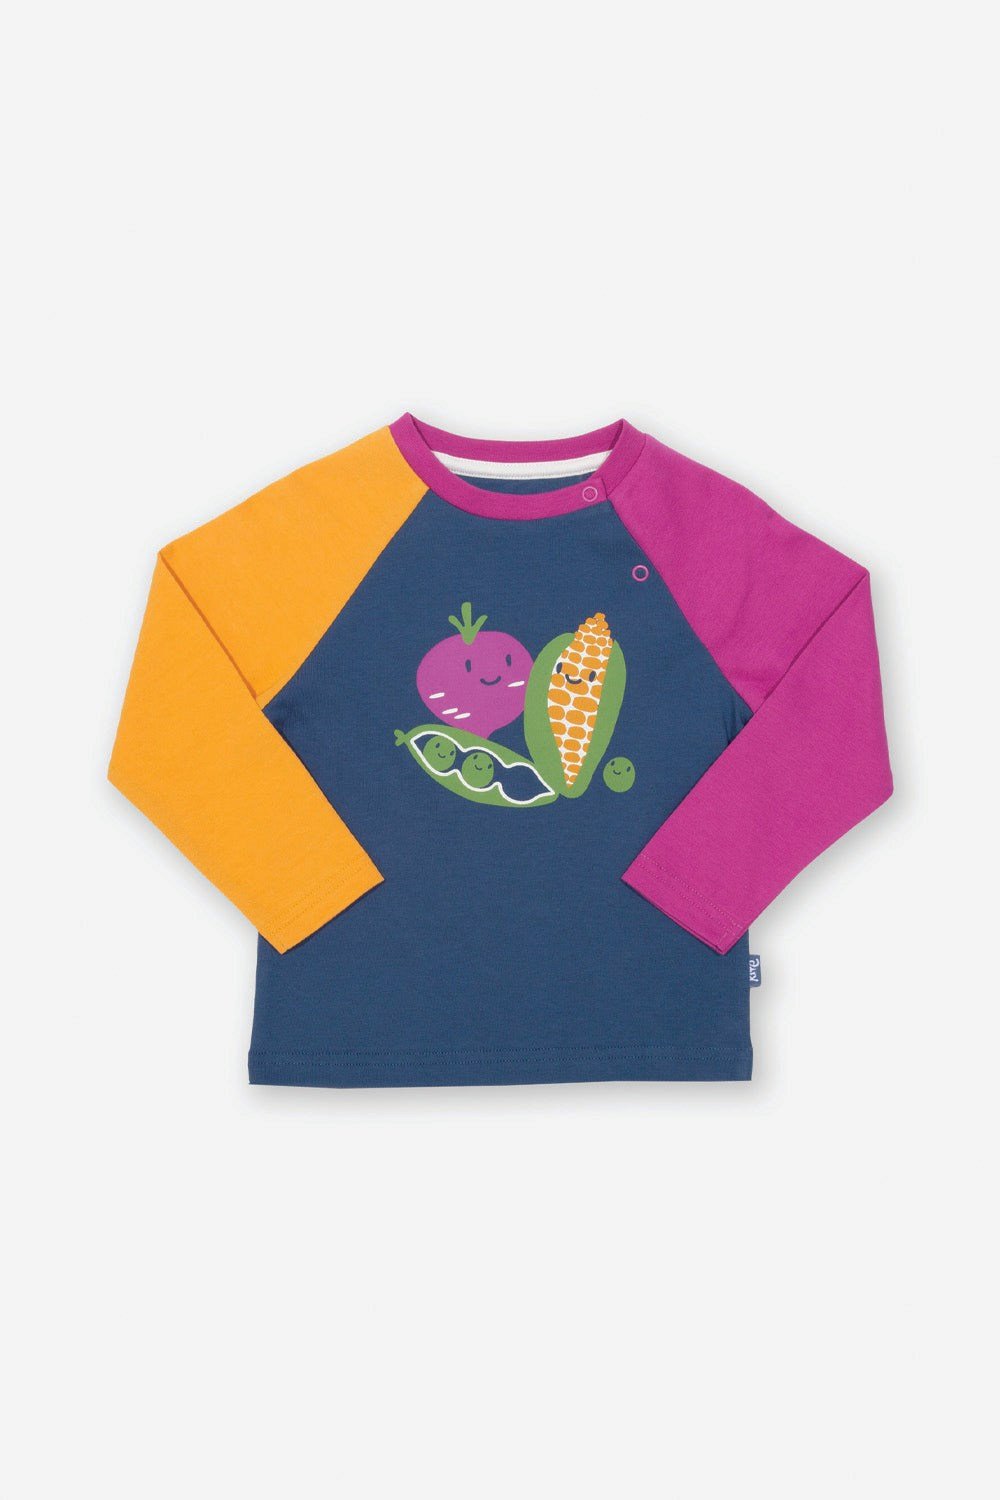 Veggie Kids T-Shirt -